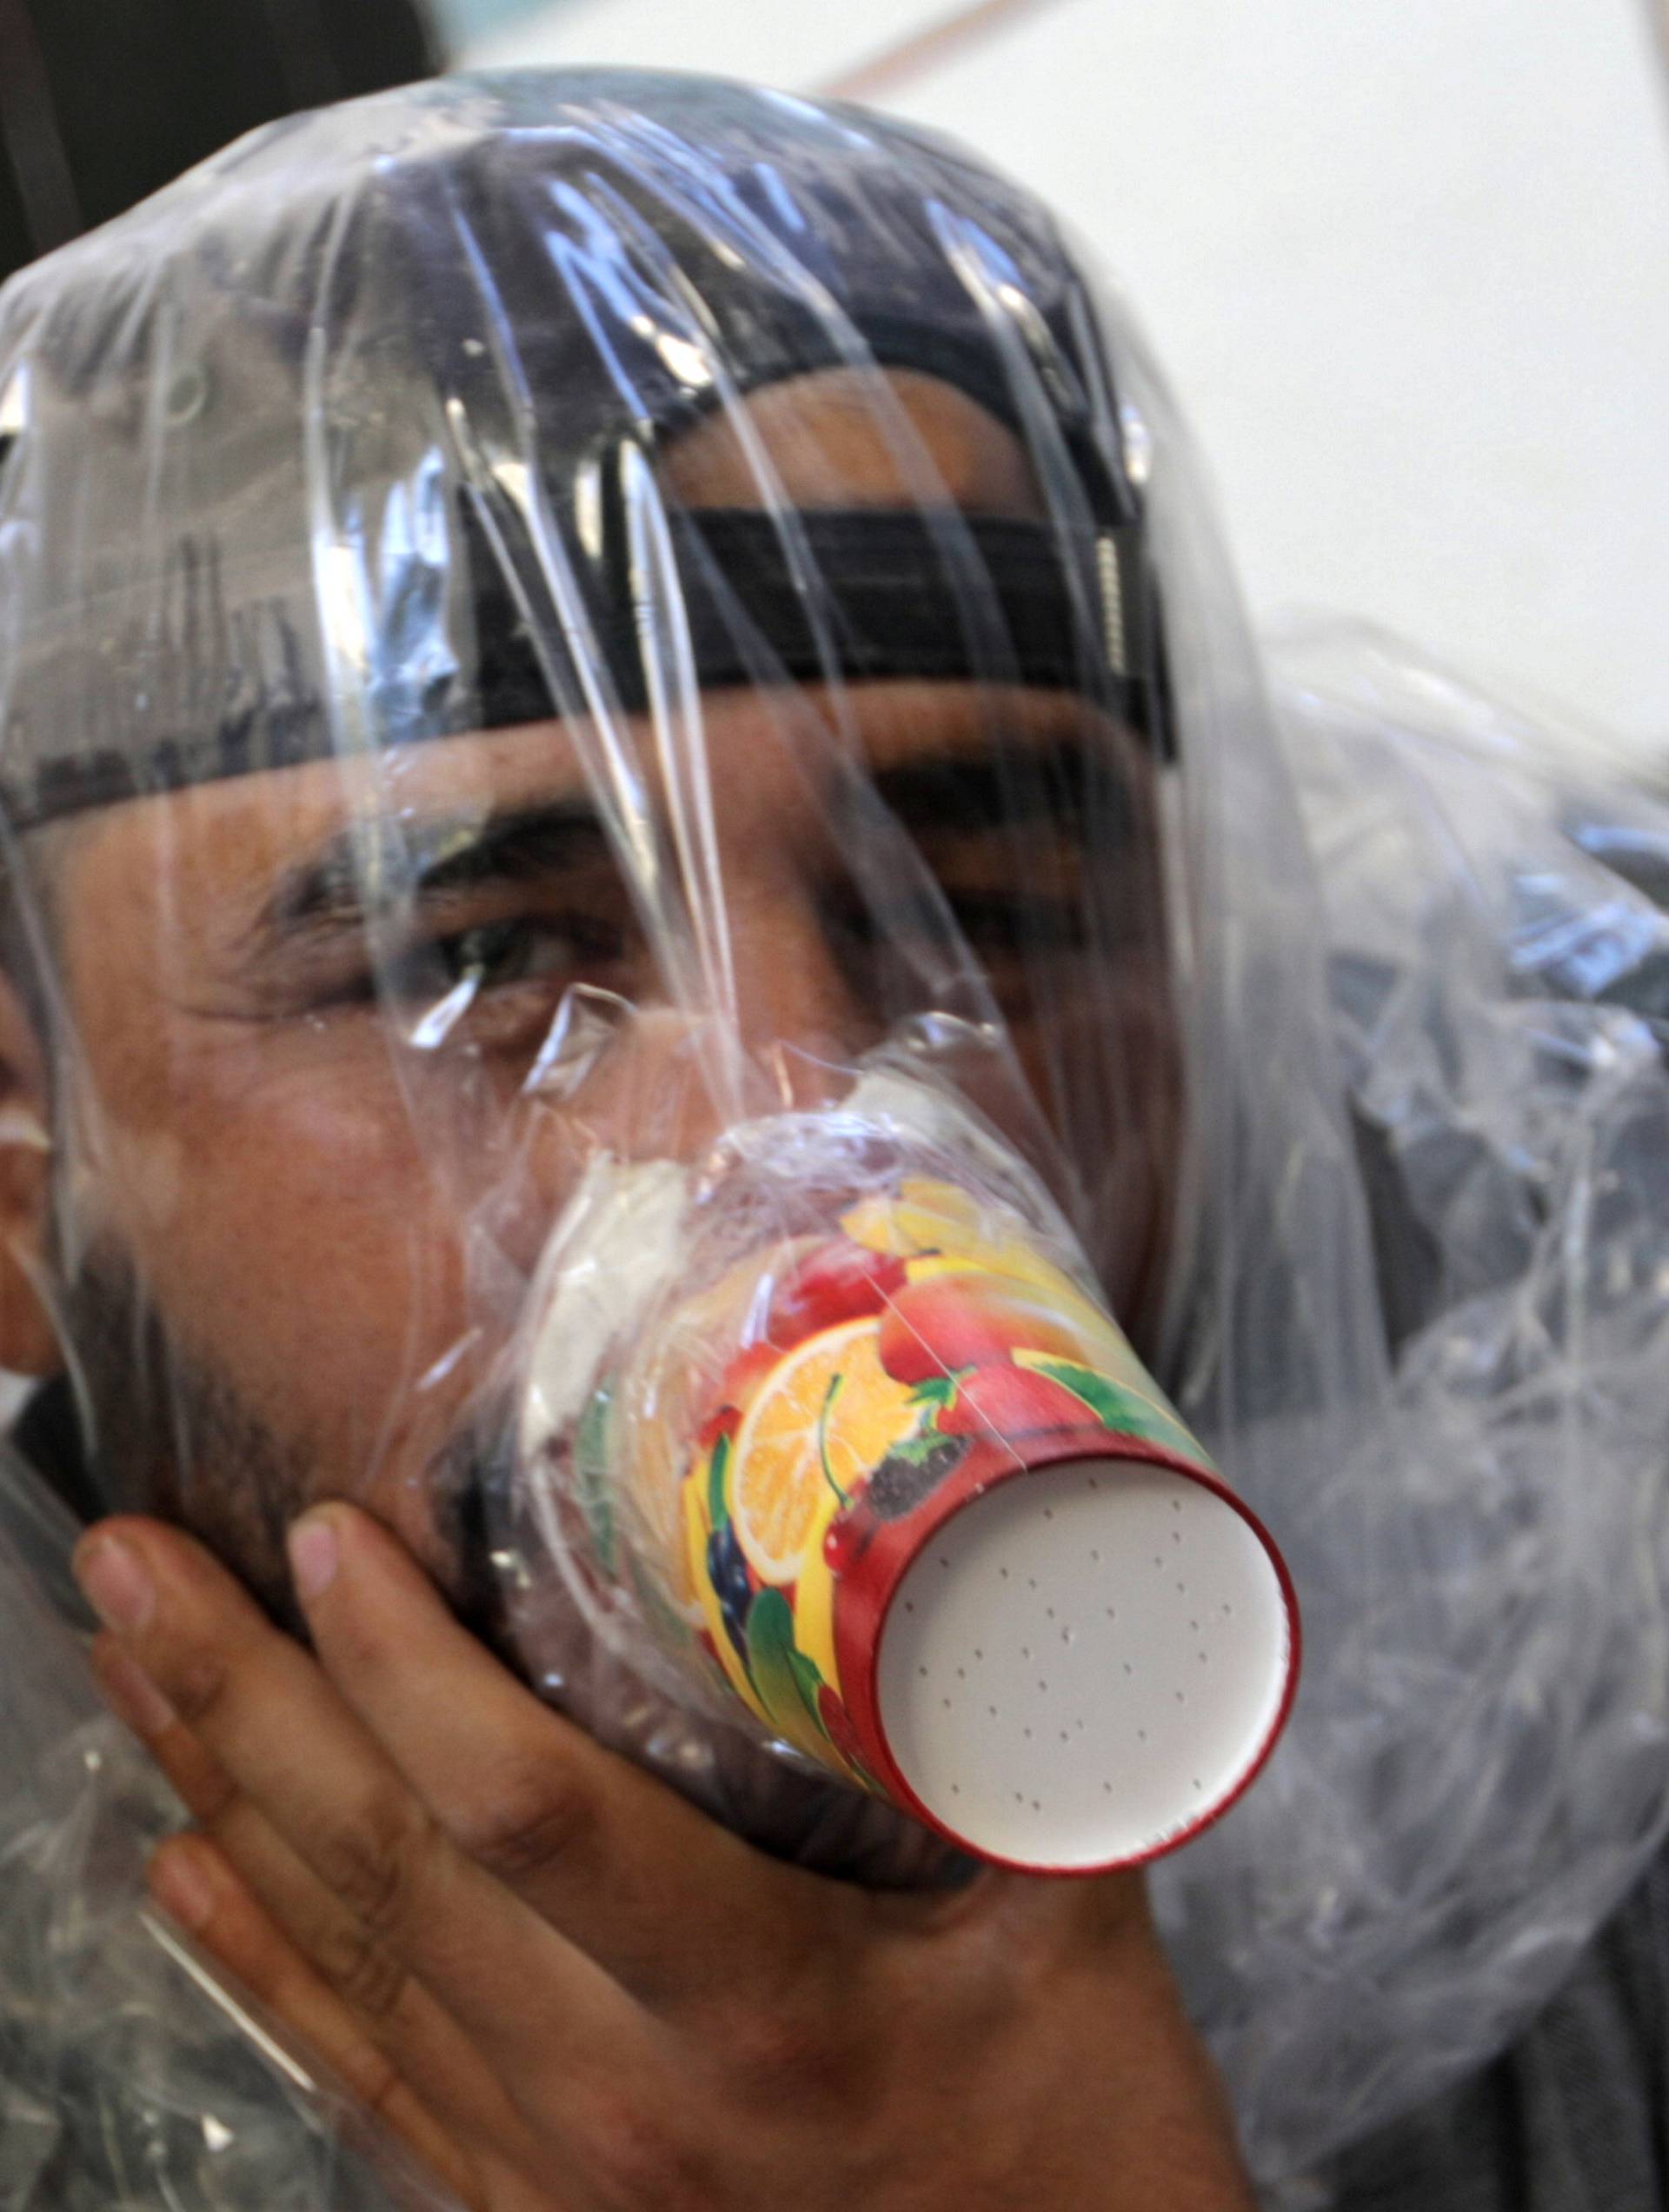 Hudhayfa al-Shahad tries an improvised gas mask in Idlib